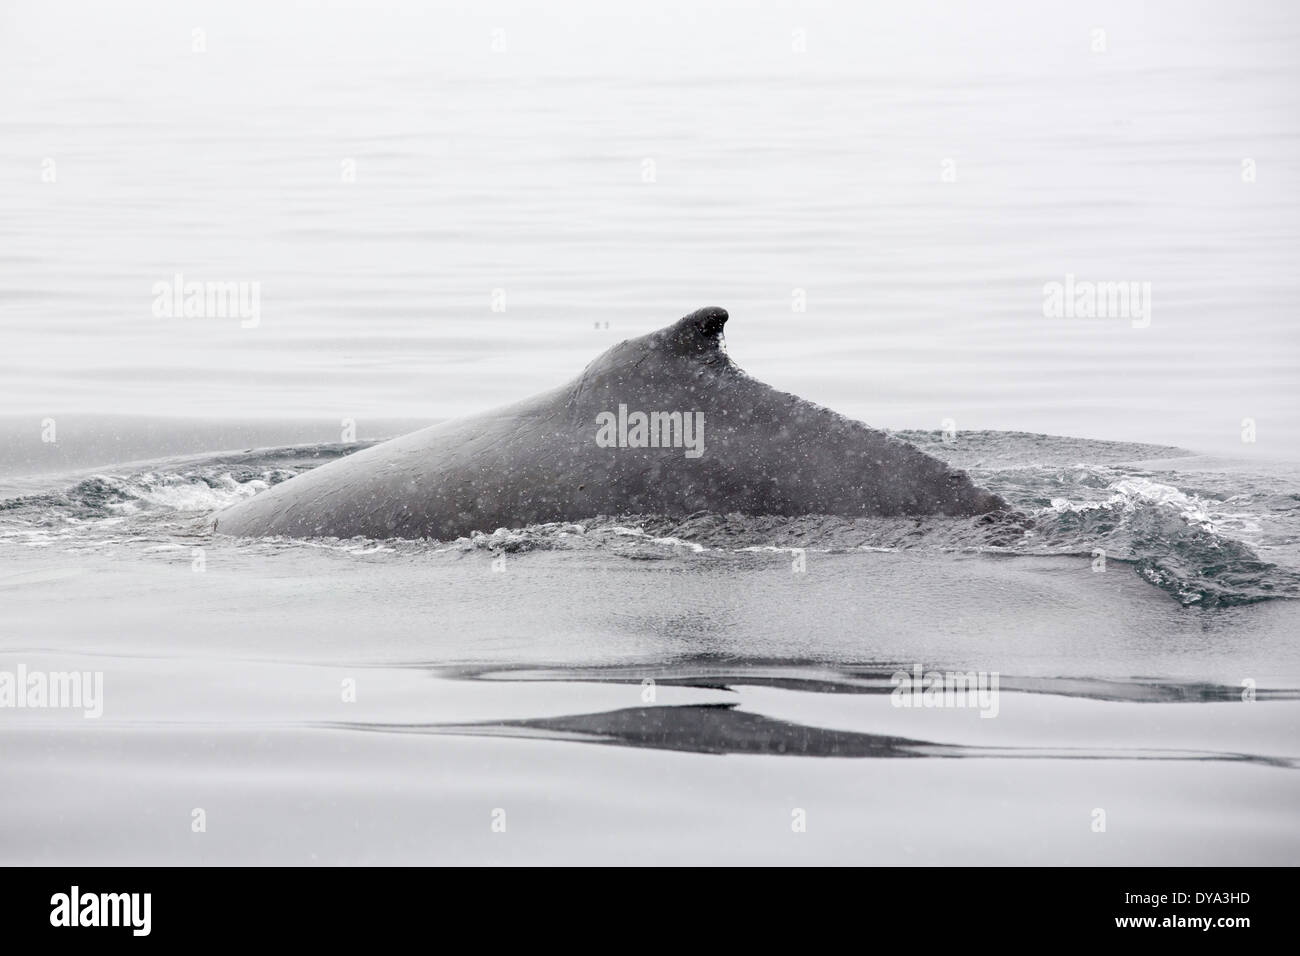 Humpback Whales feeding on krill in Wilhelmena Bay on the Antarctic Peninsular. Stock Photo